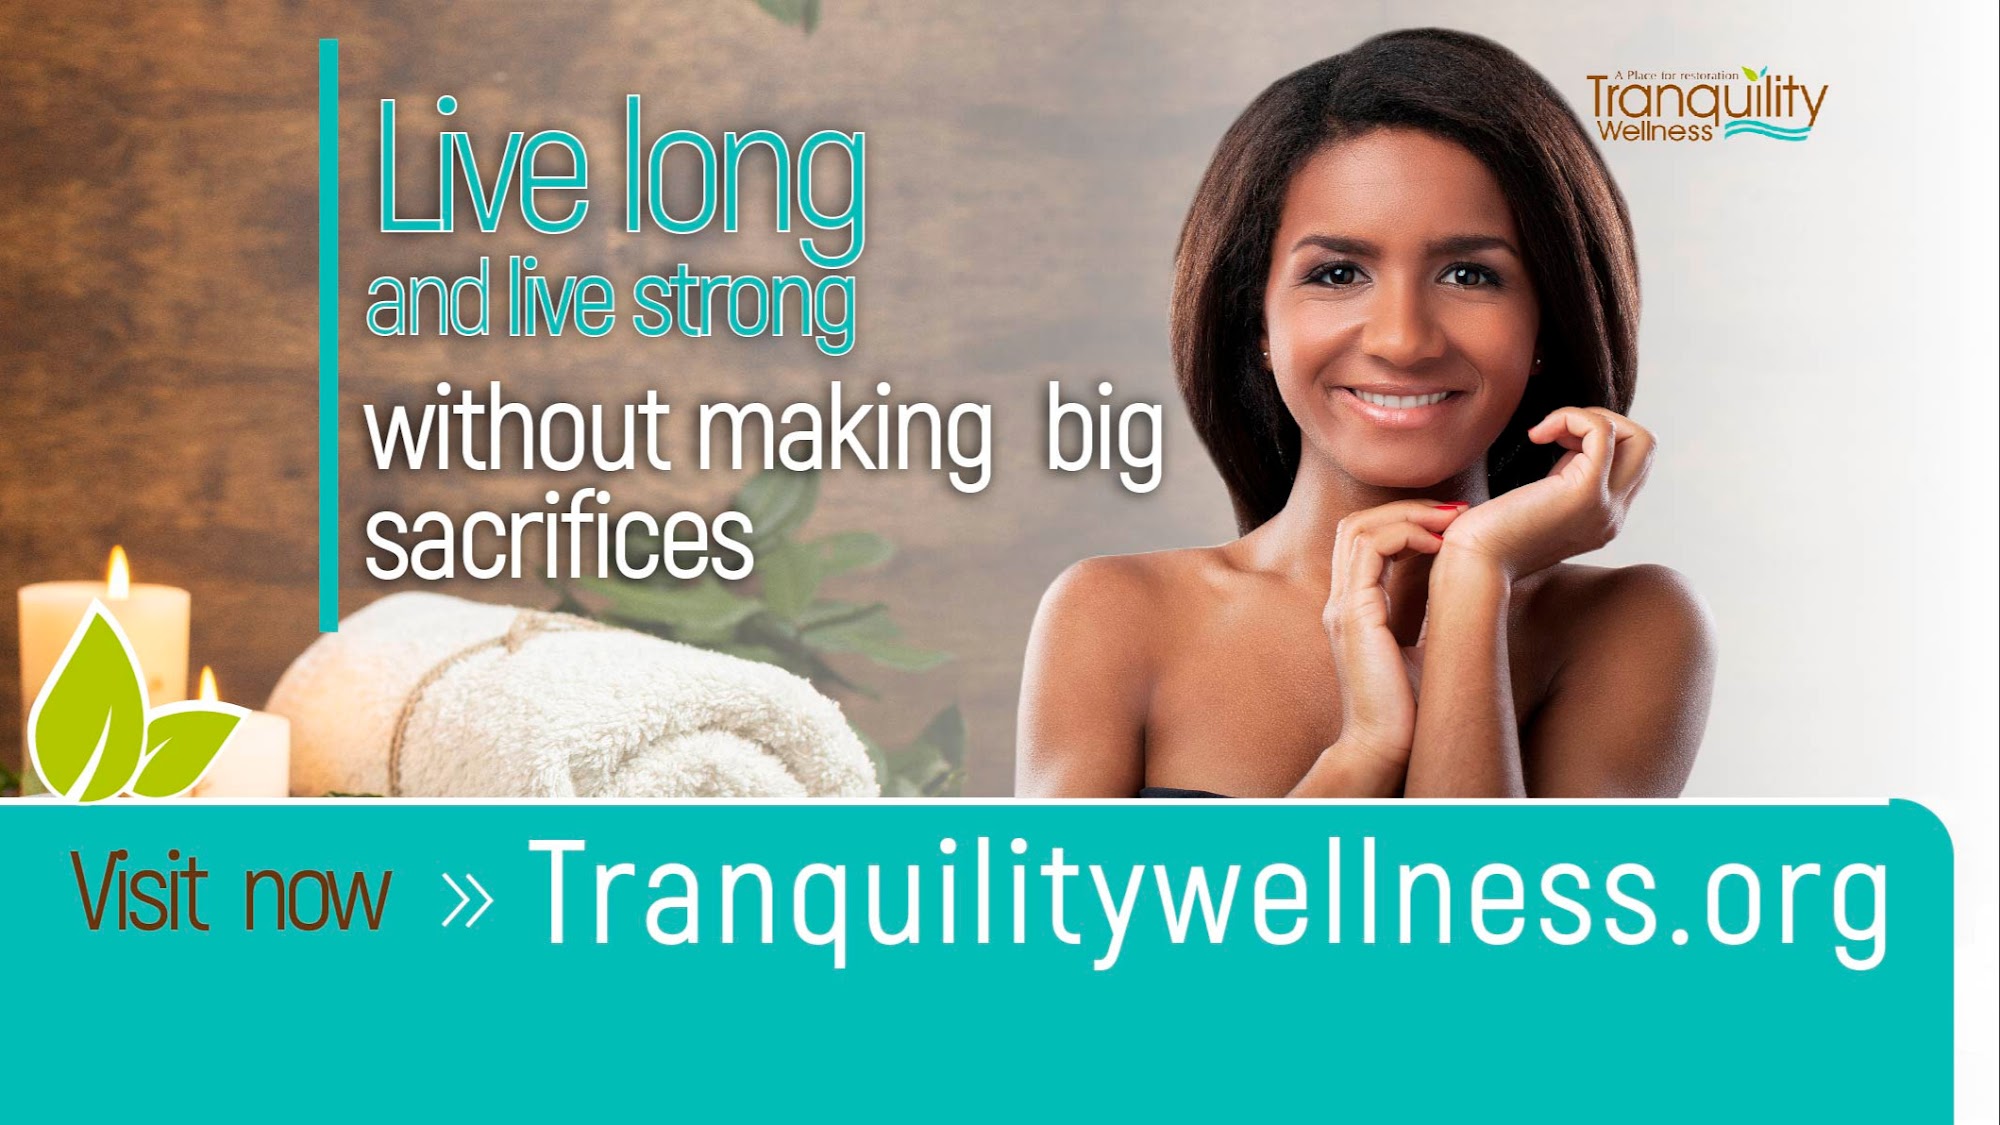 Tranquility Wellness Center 4910 Jonesboro Rd Suite #702, Union City Georgia 30291